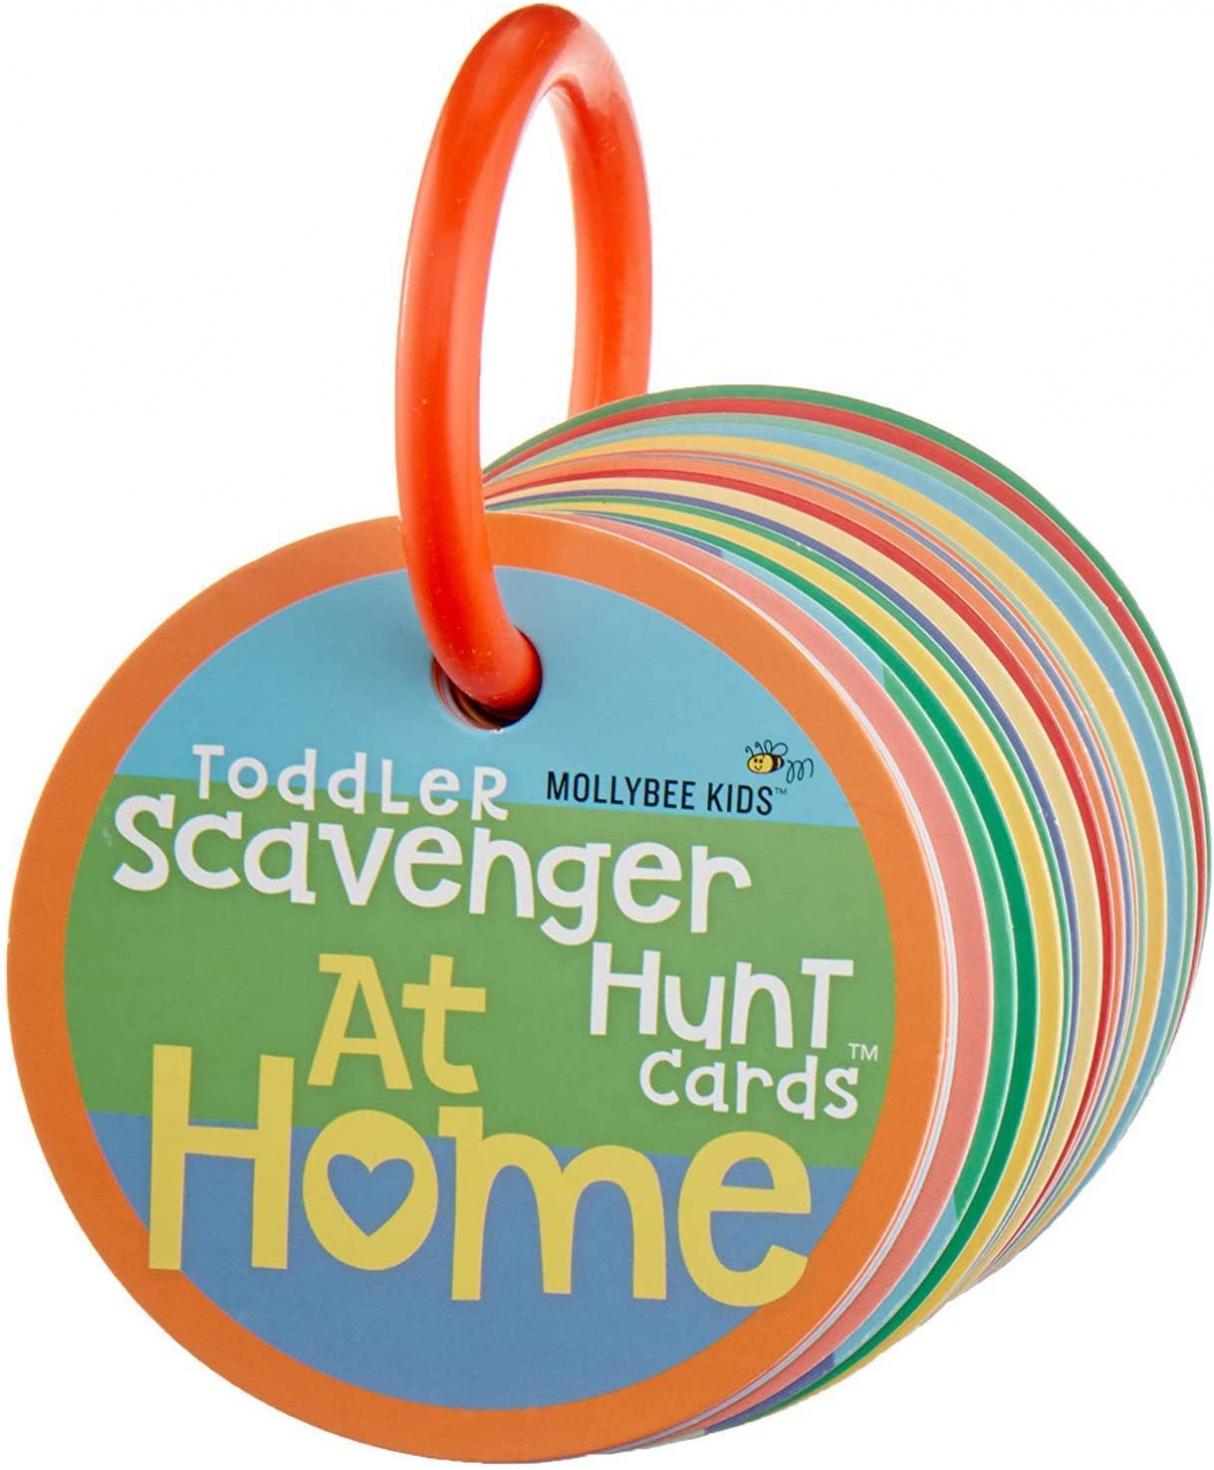 MOLLYBEE KIDS Toddler Scavenger Hunt Cards at Home